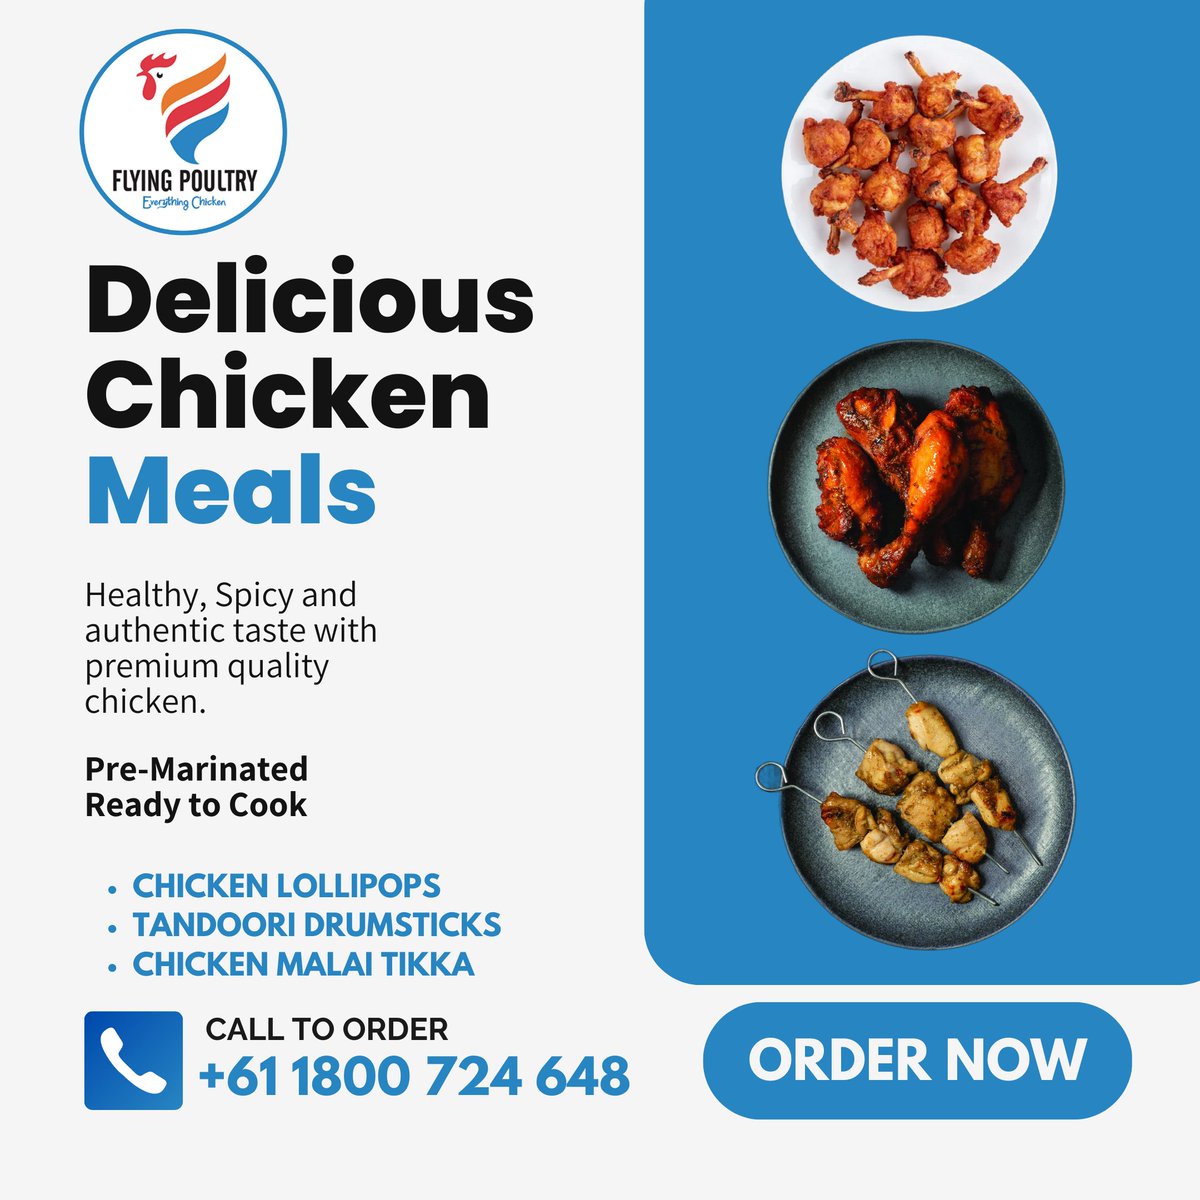 Chicken Meals Ready to Cook Pre-Marinated Order Now @ +61 1800 724 648 #shareus #Australia #TrendingNow #reelsinstagram #australia #healthyeating #indiansinsydney #MELBOURNE #viral #sydney #chicken #melbourne #tandoorichicken #contest #bbq #reels #schnitzel #healthylifestyle